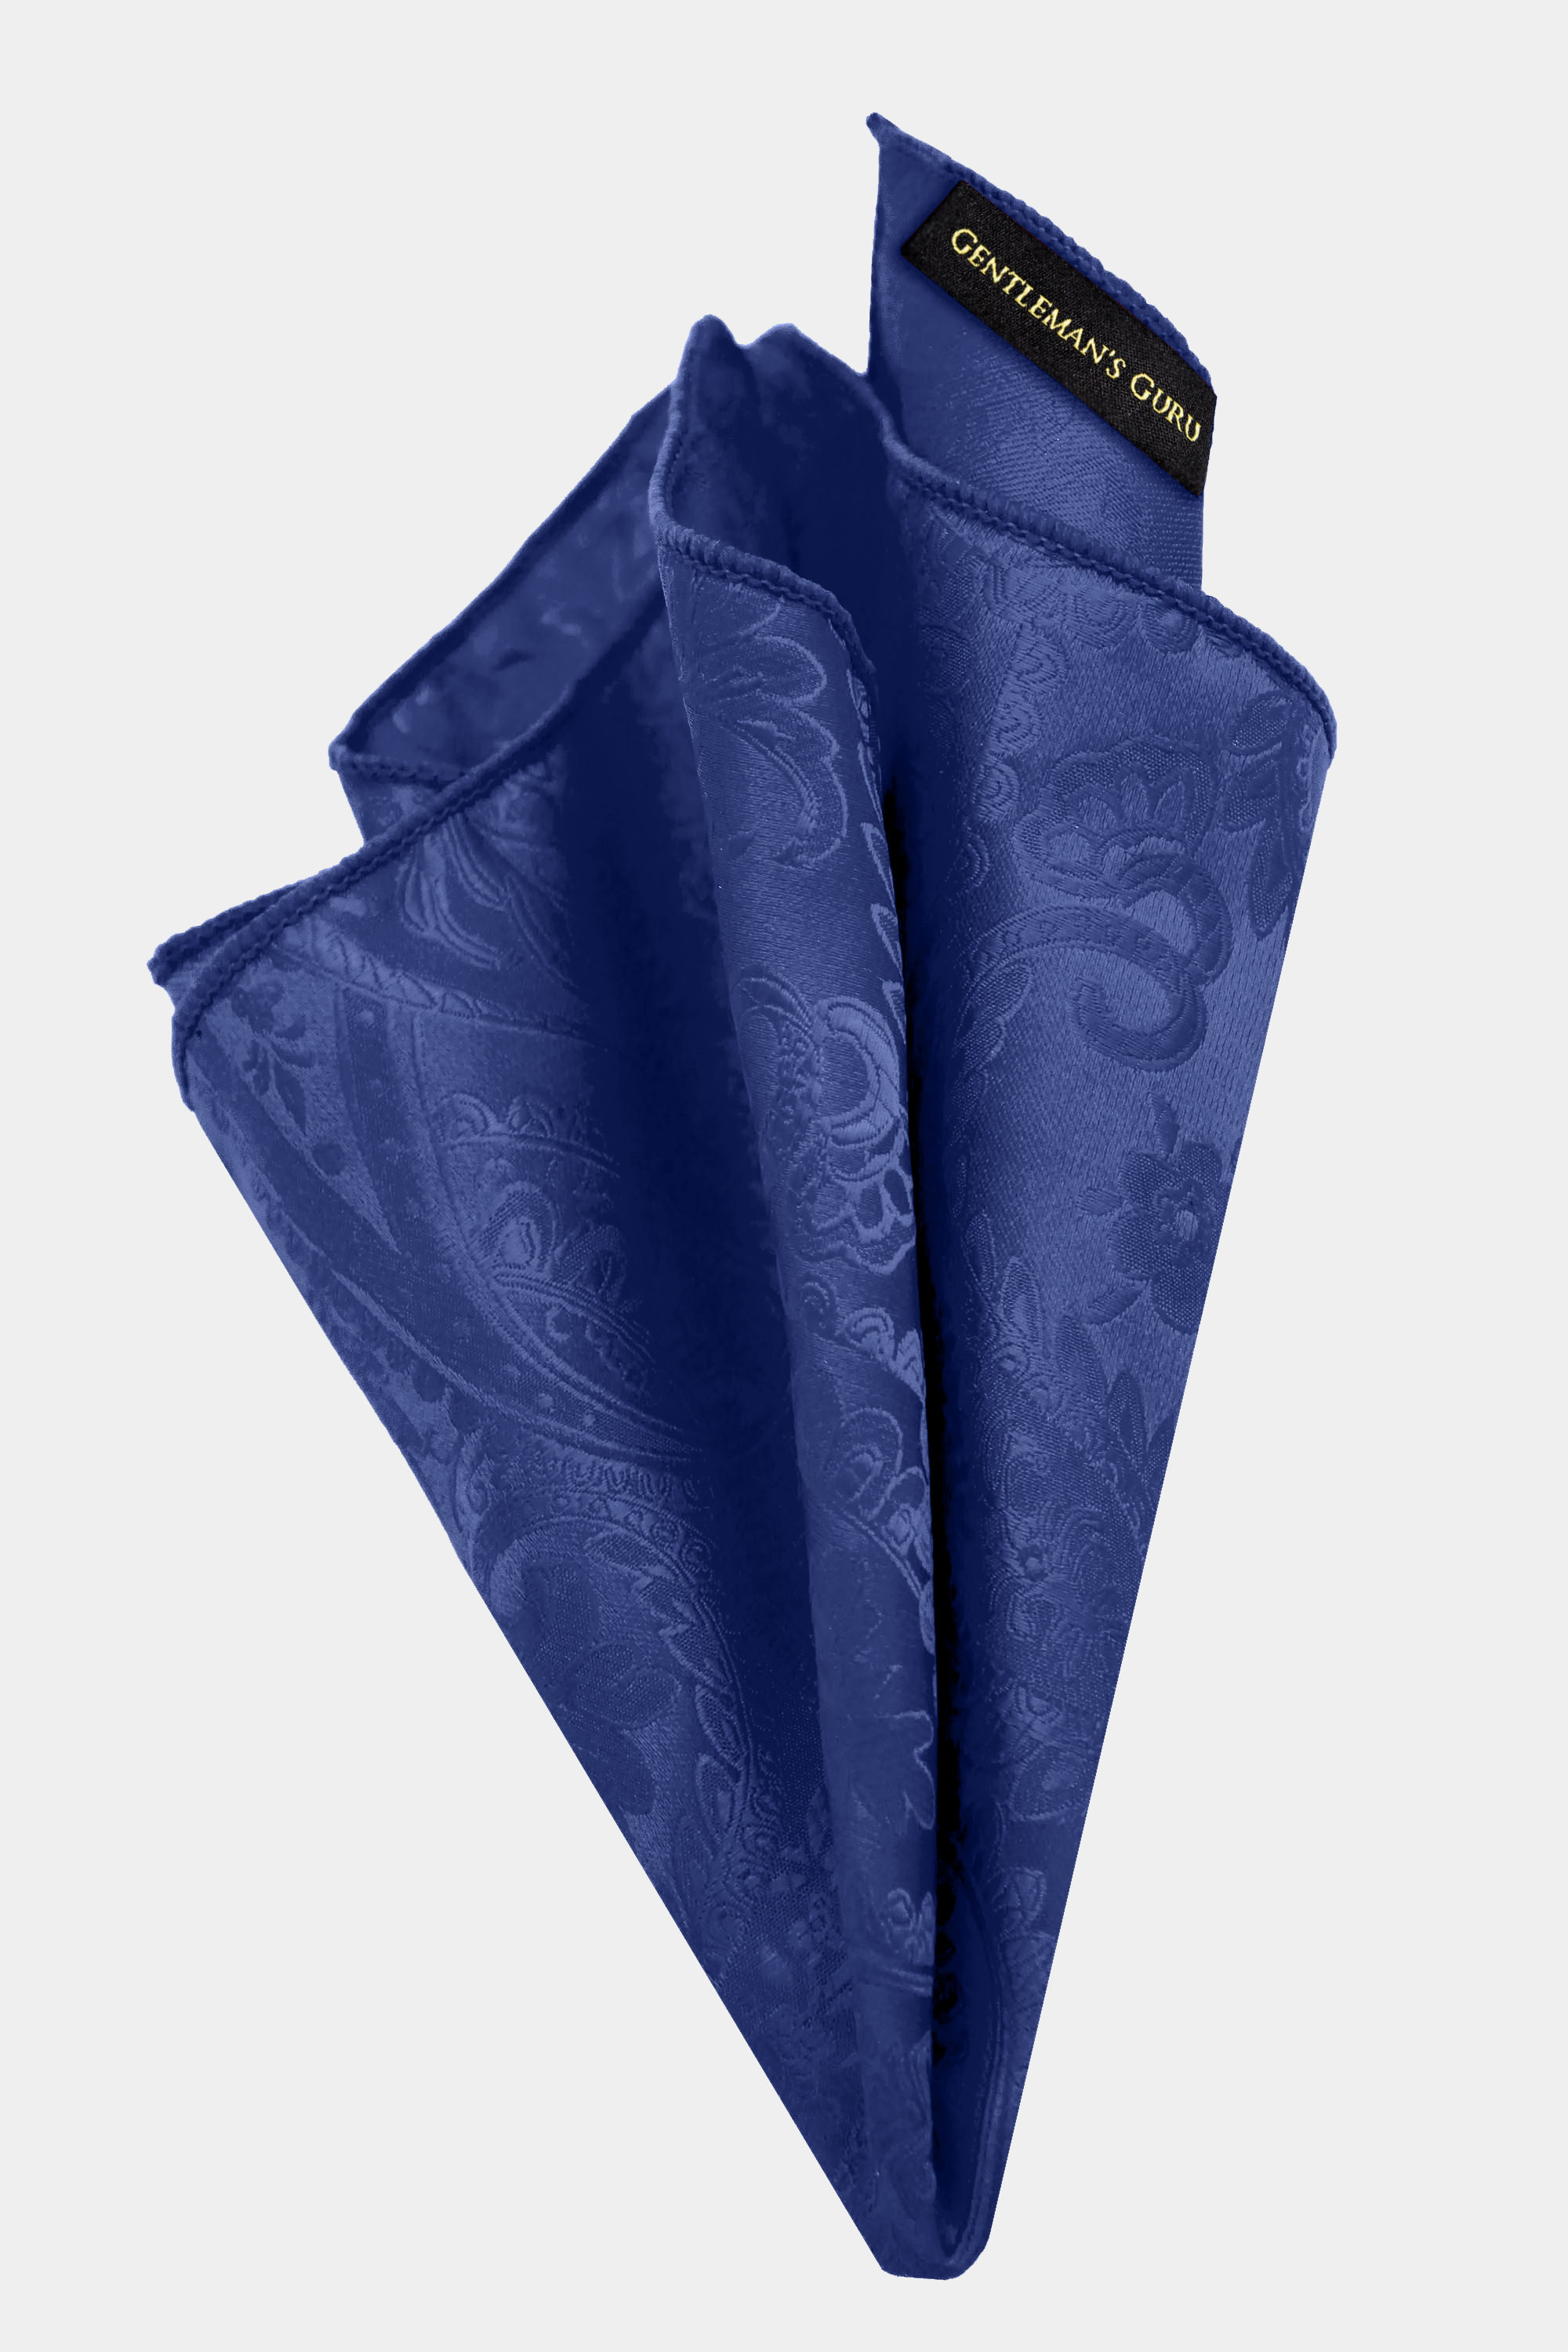 Navy-Blue-Pocket-Square-Handkerchief-from-Gentlemansguru.com